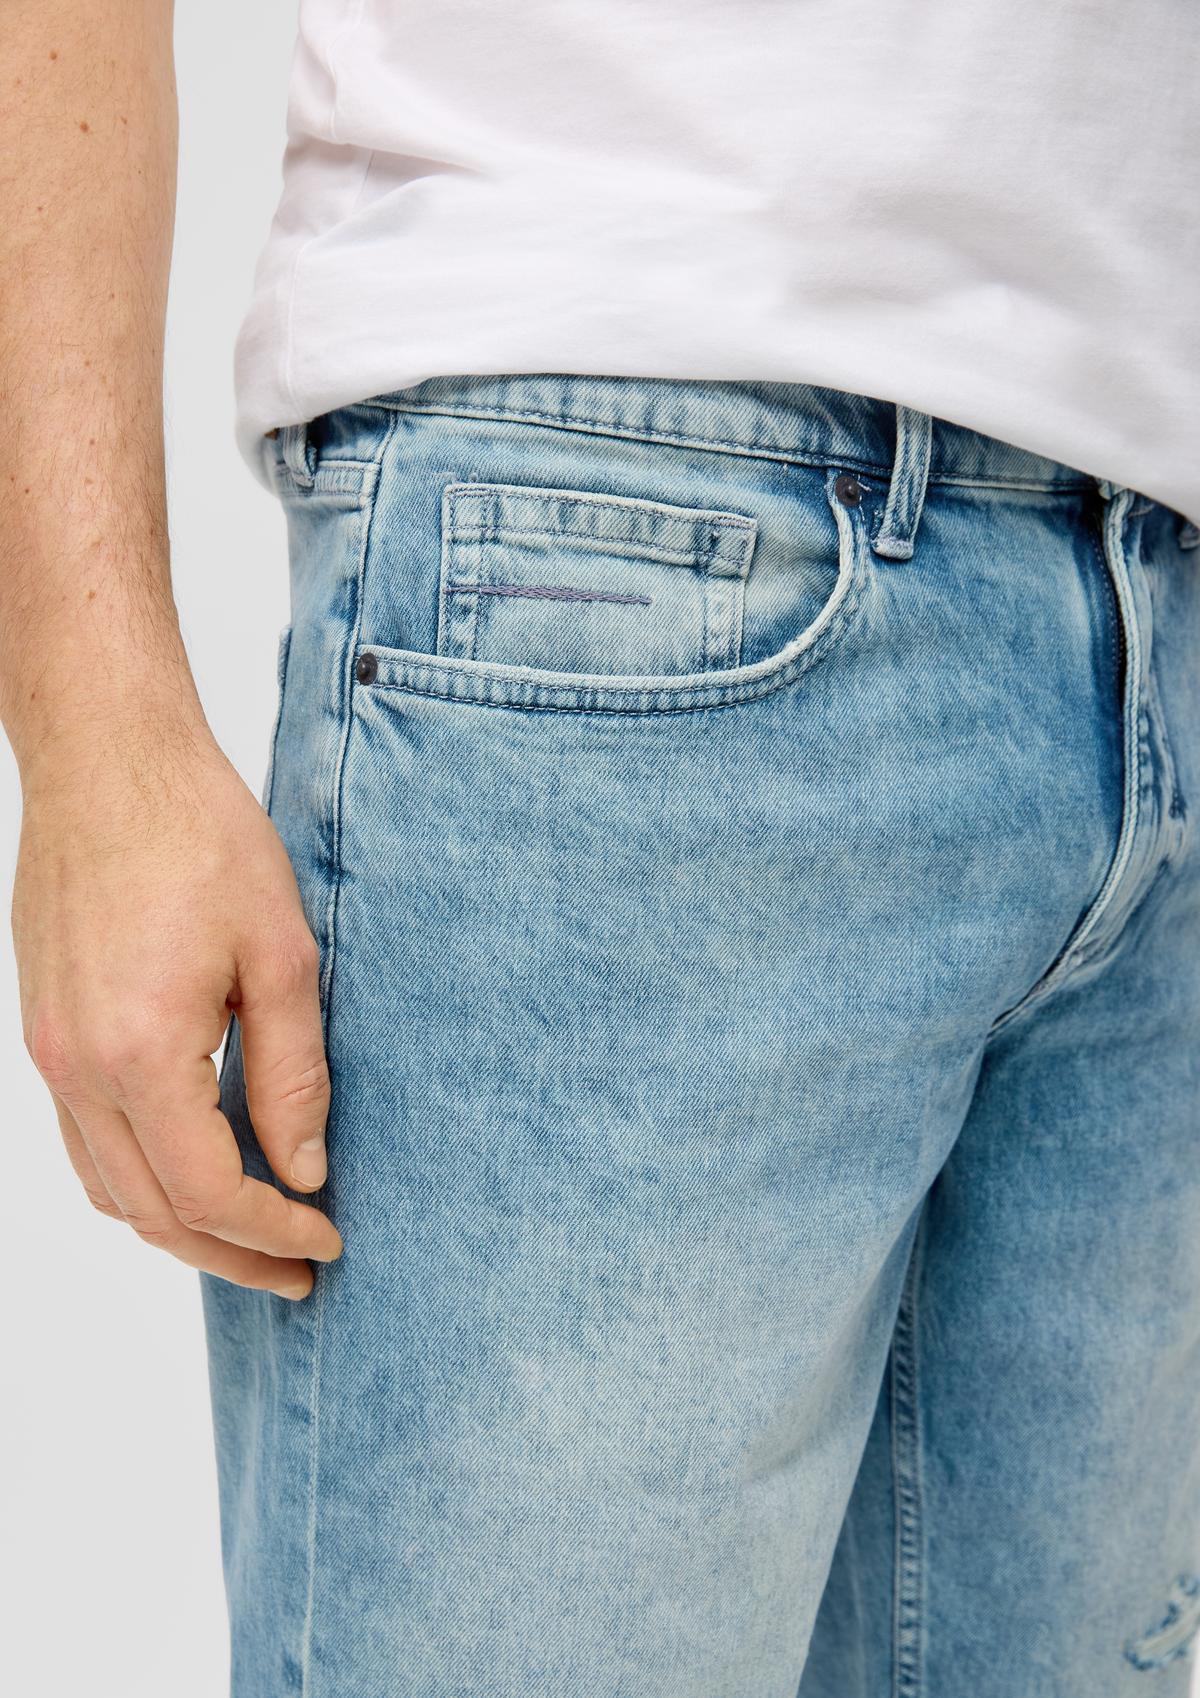 s.Oliver Jeans-short / regular fit / mid rise / slim leg